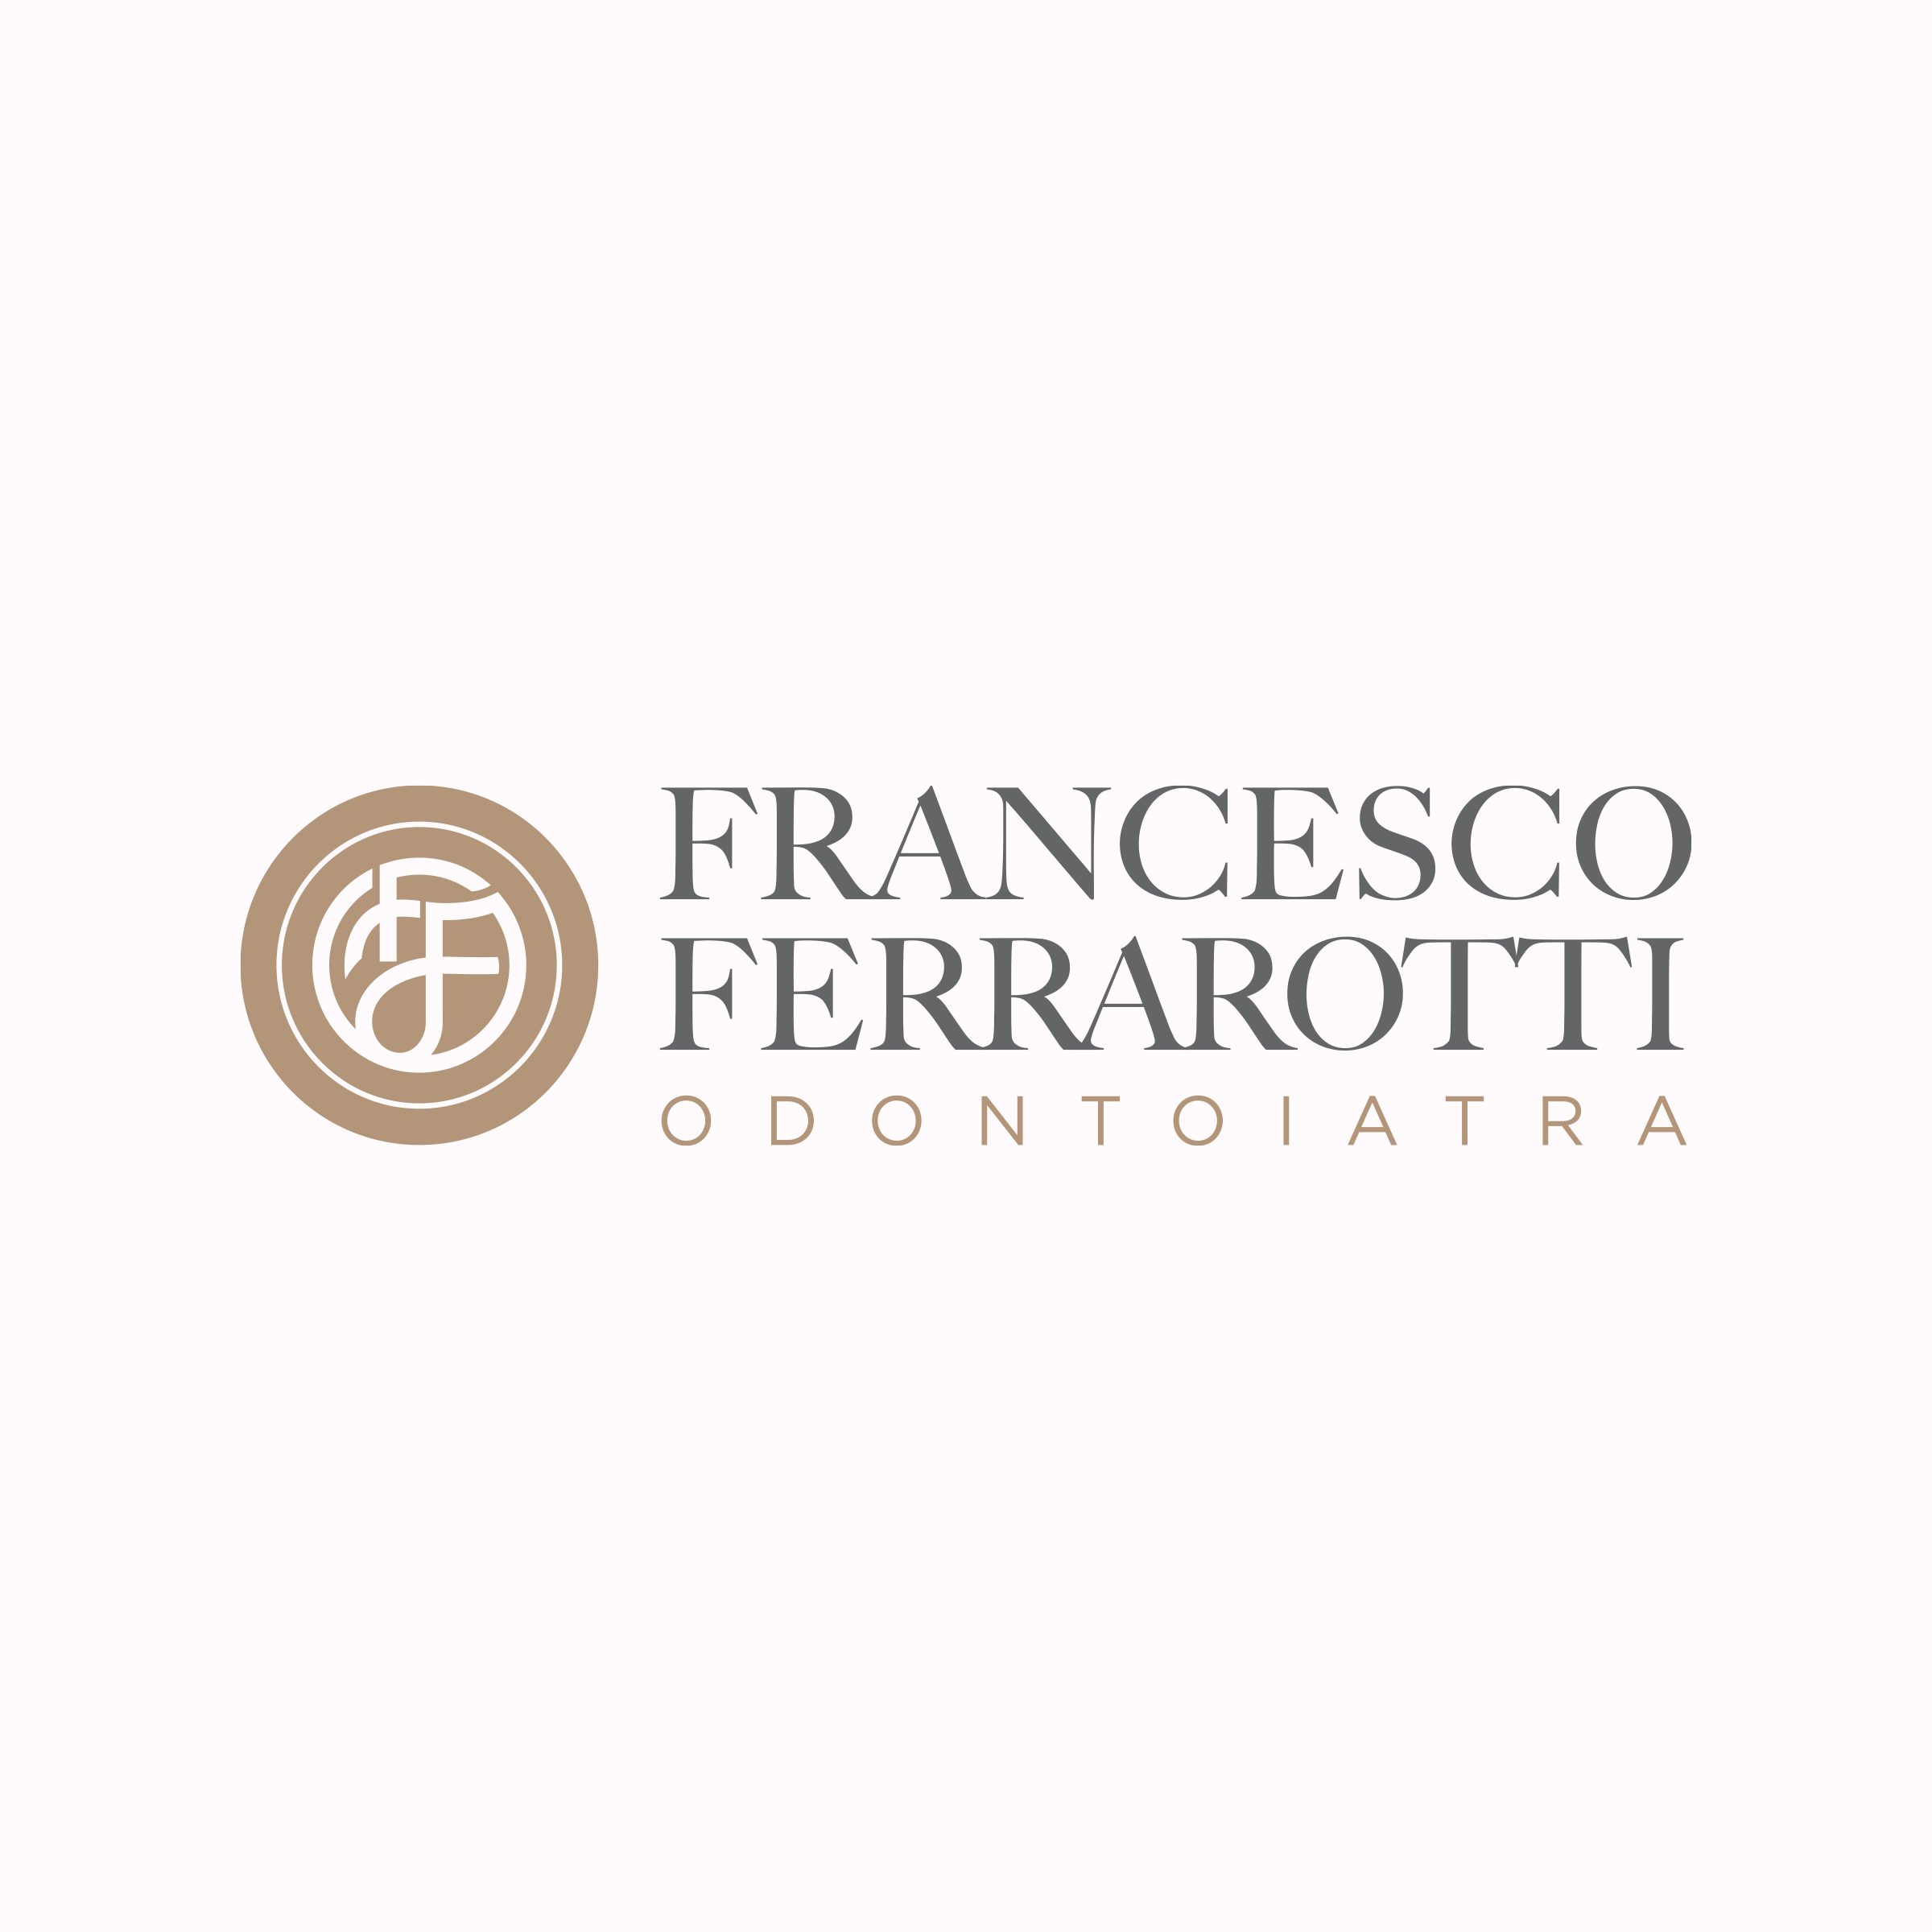 (c) Francescoferrarotti.it